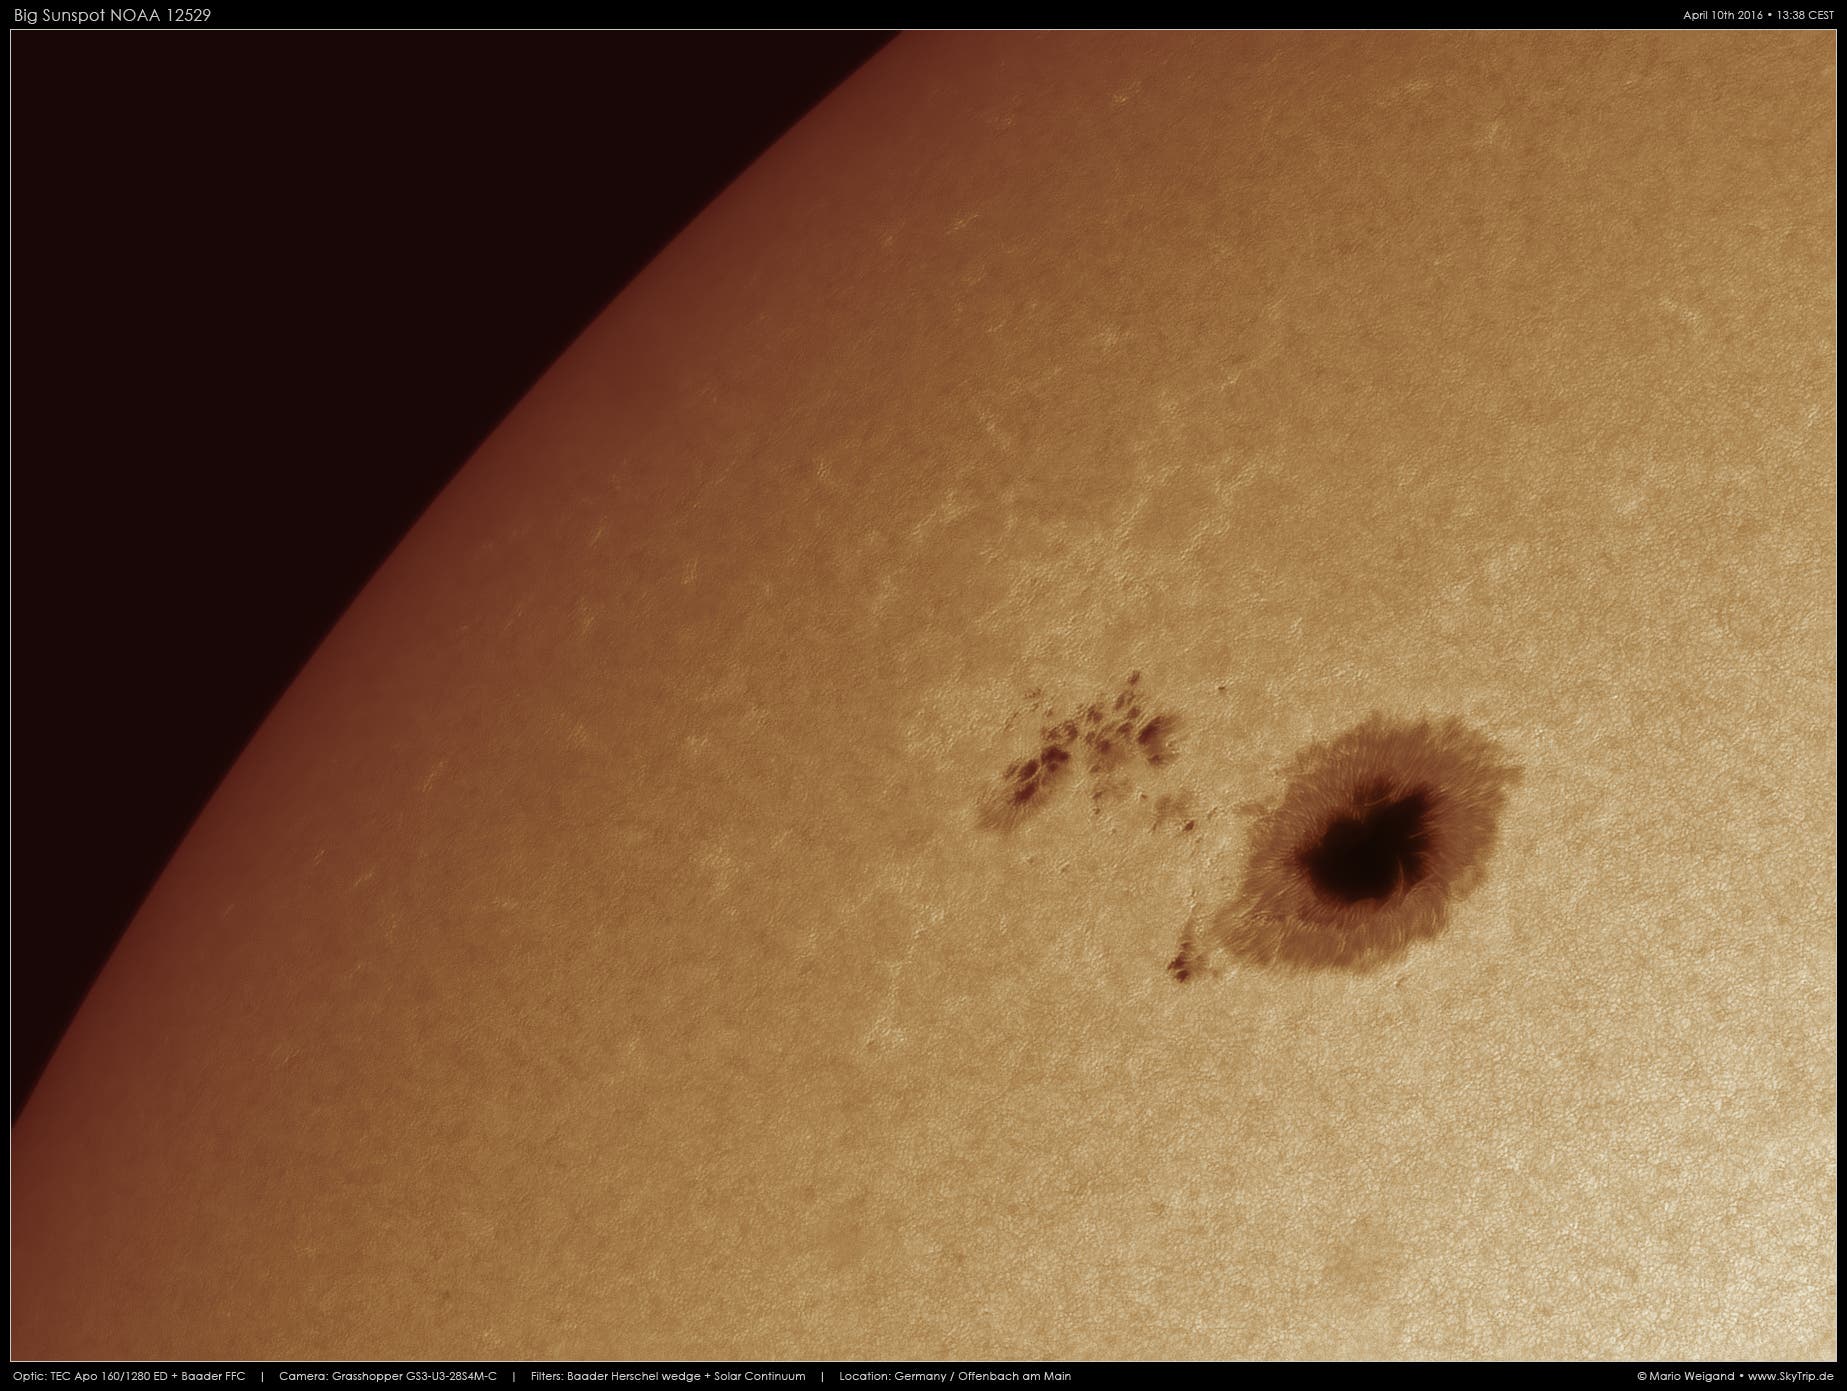 Der große Sonnenfleck NOAA 12529